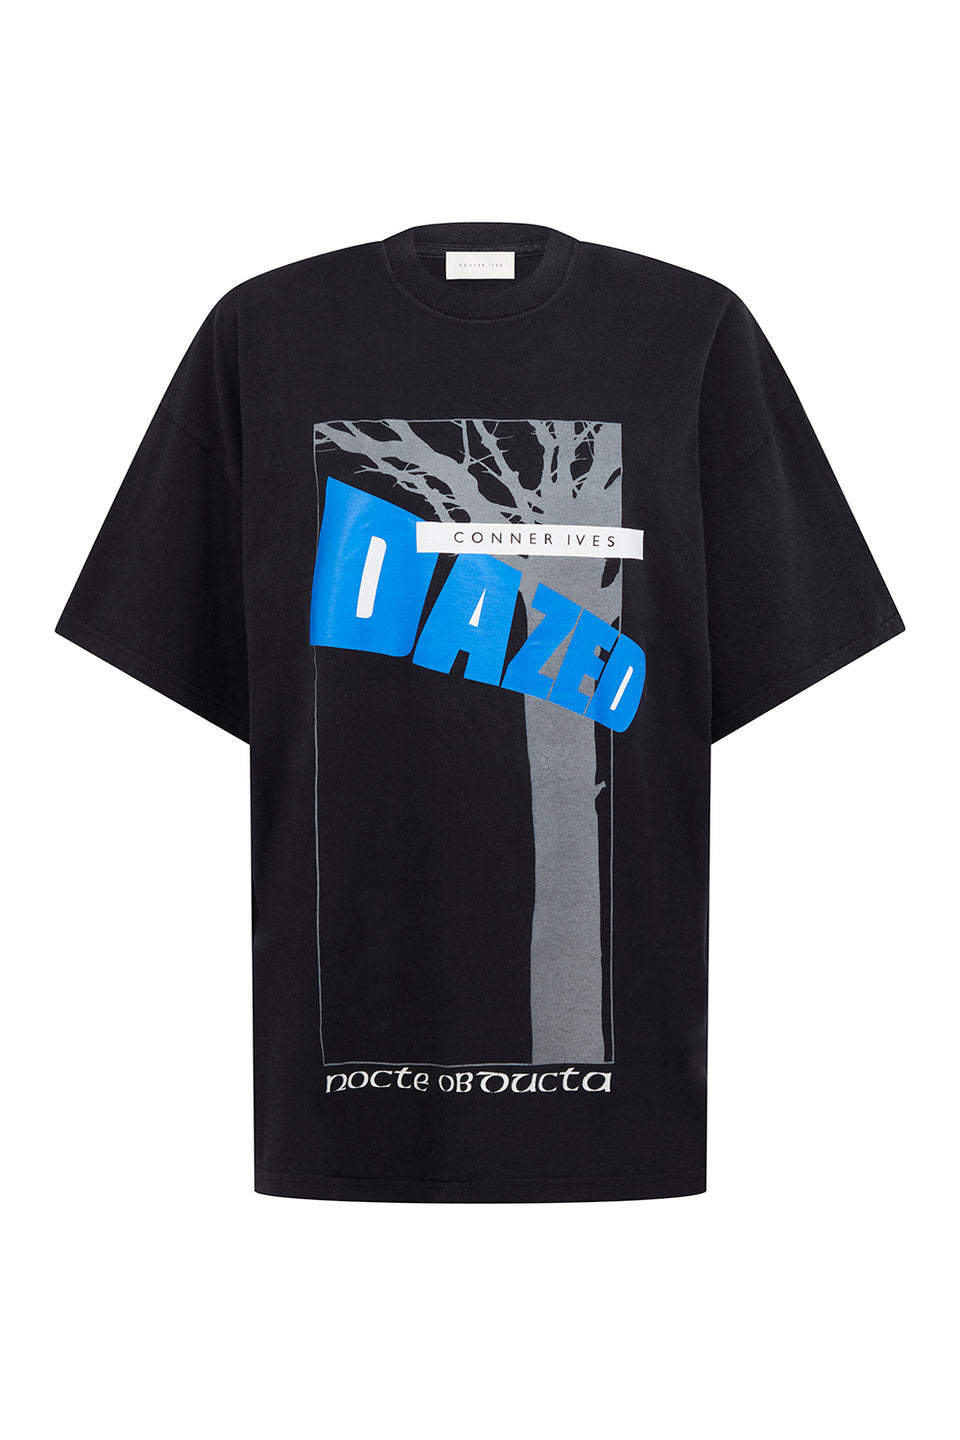 Conner Ives x Dazed Reprint T-shirt - Medium